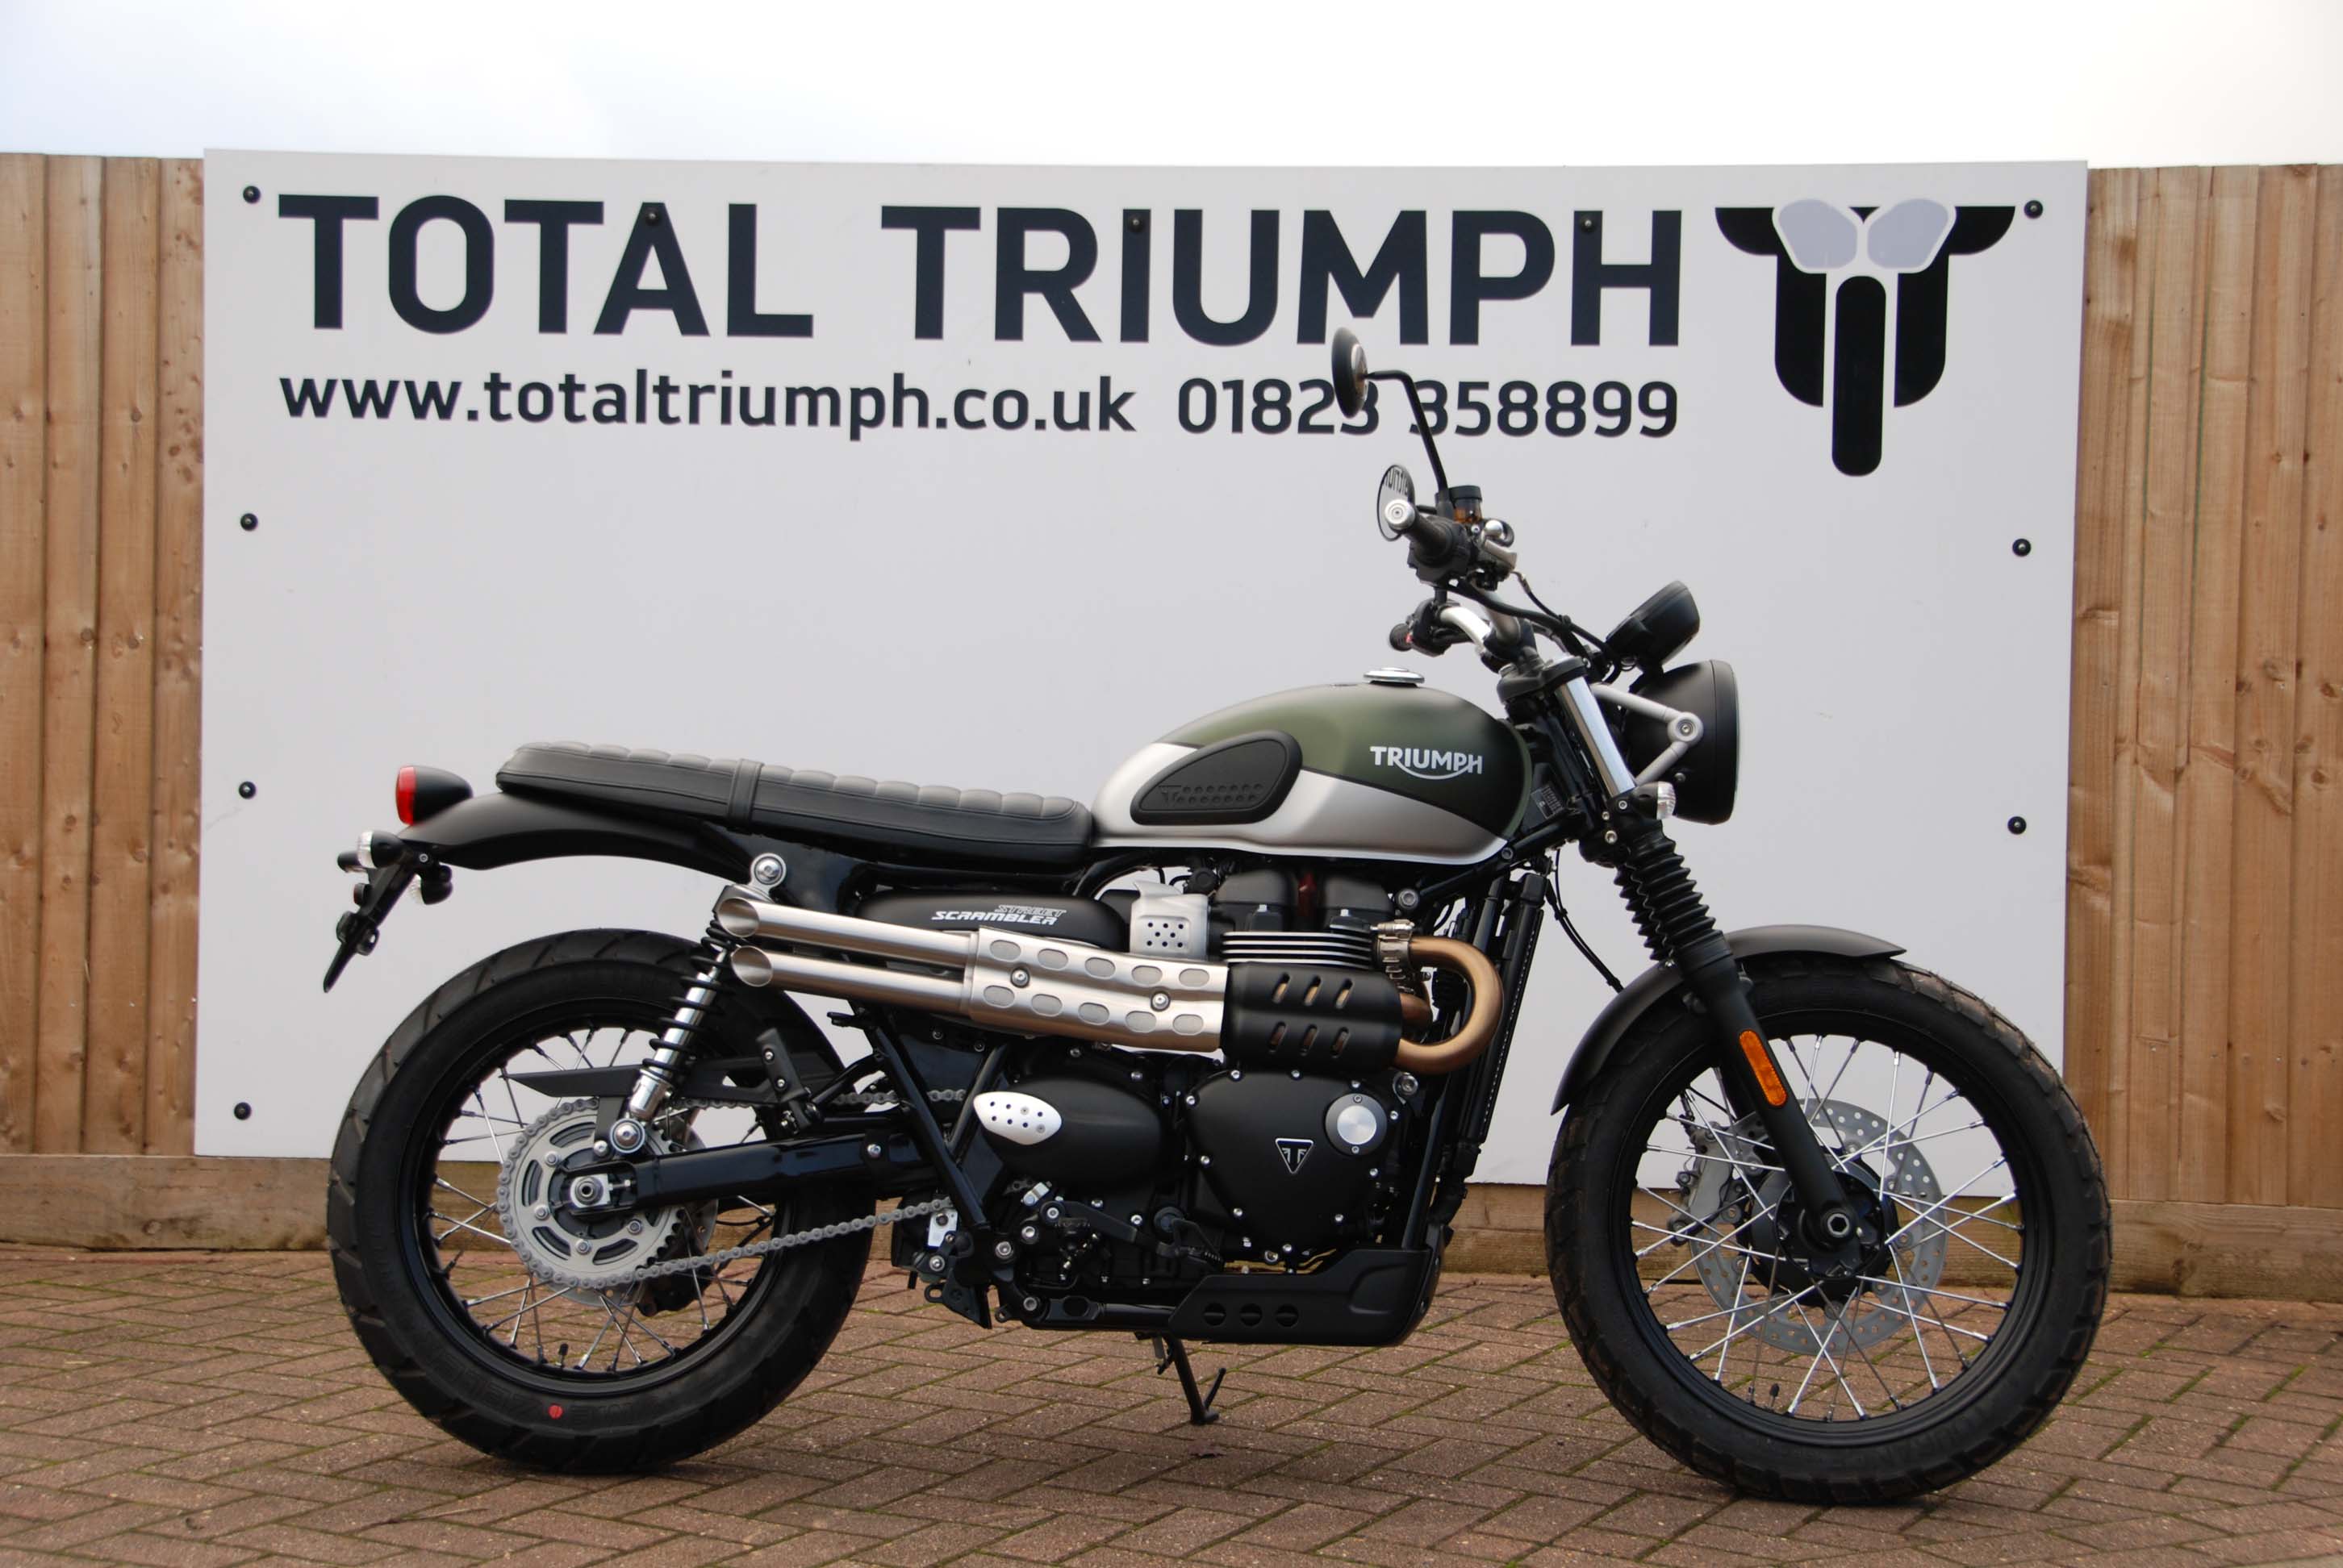 Triumph Motorcycle Parts & Accessories